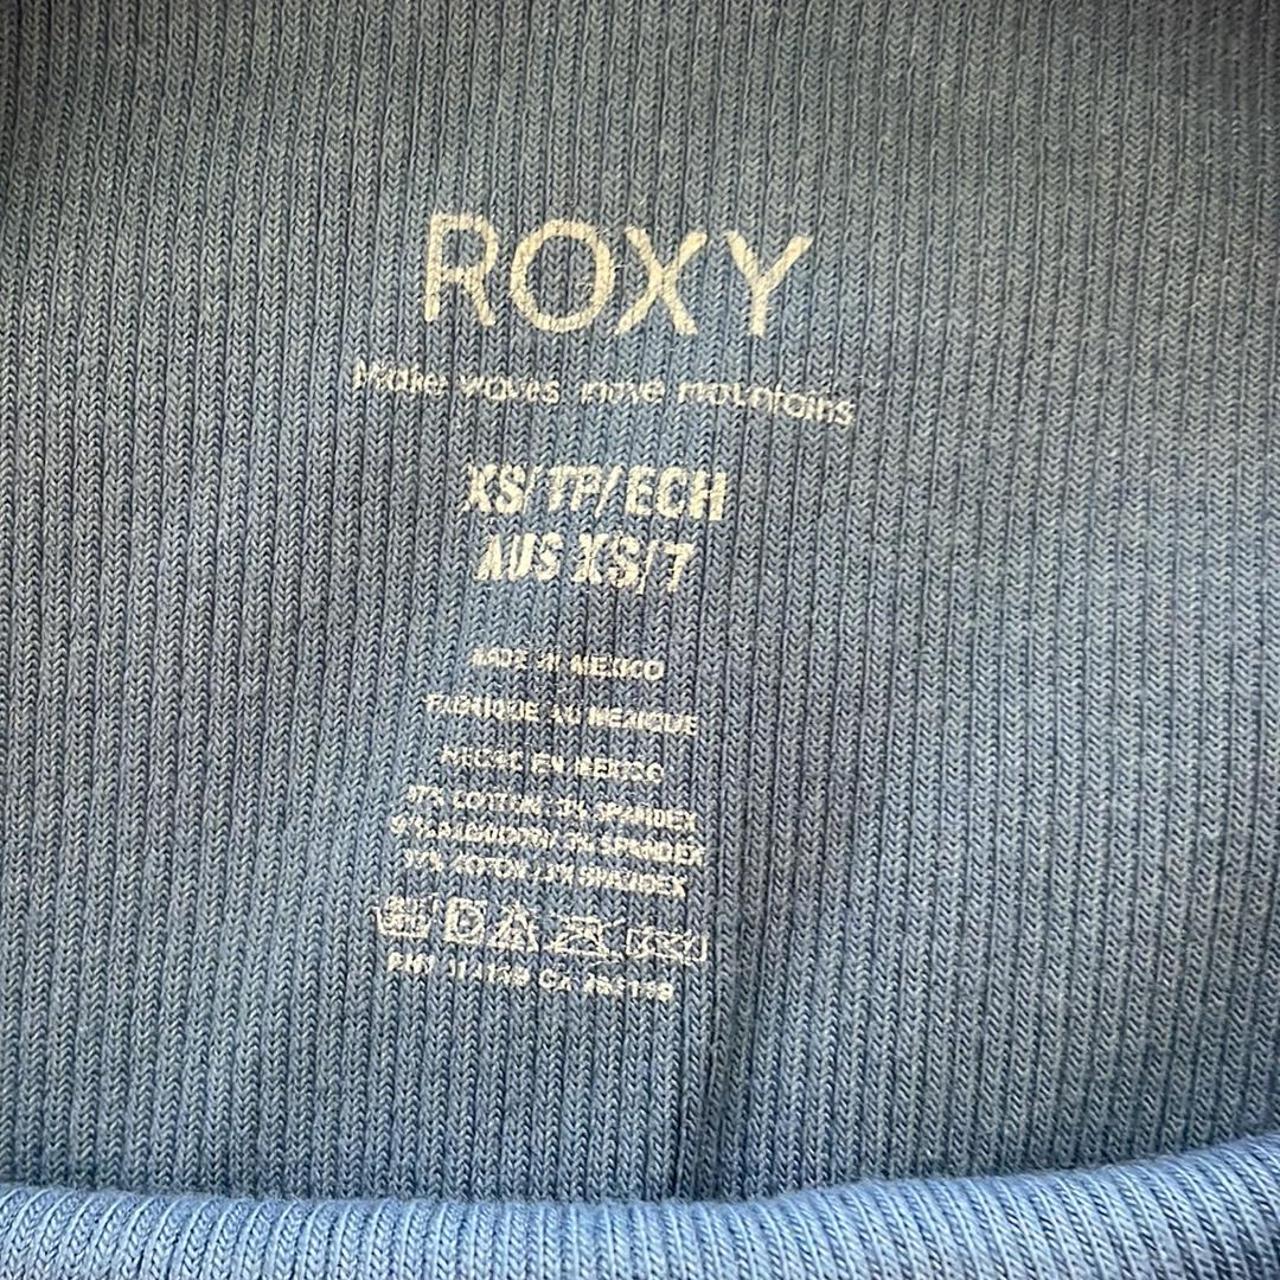 Roxy Women's Vest (4)